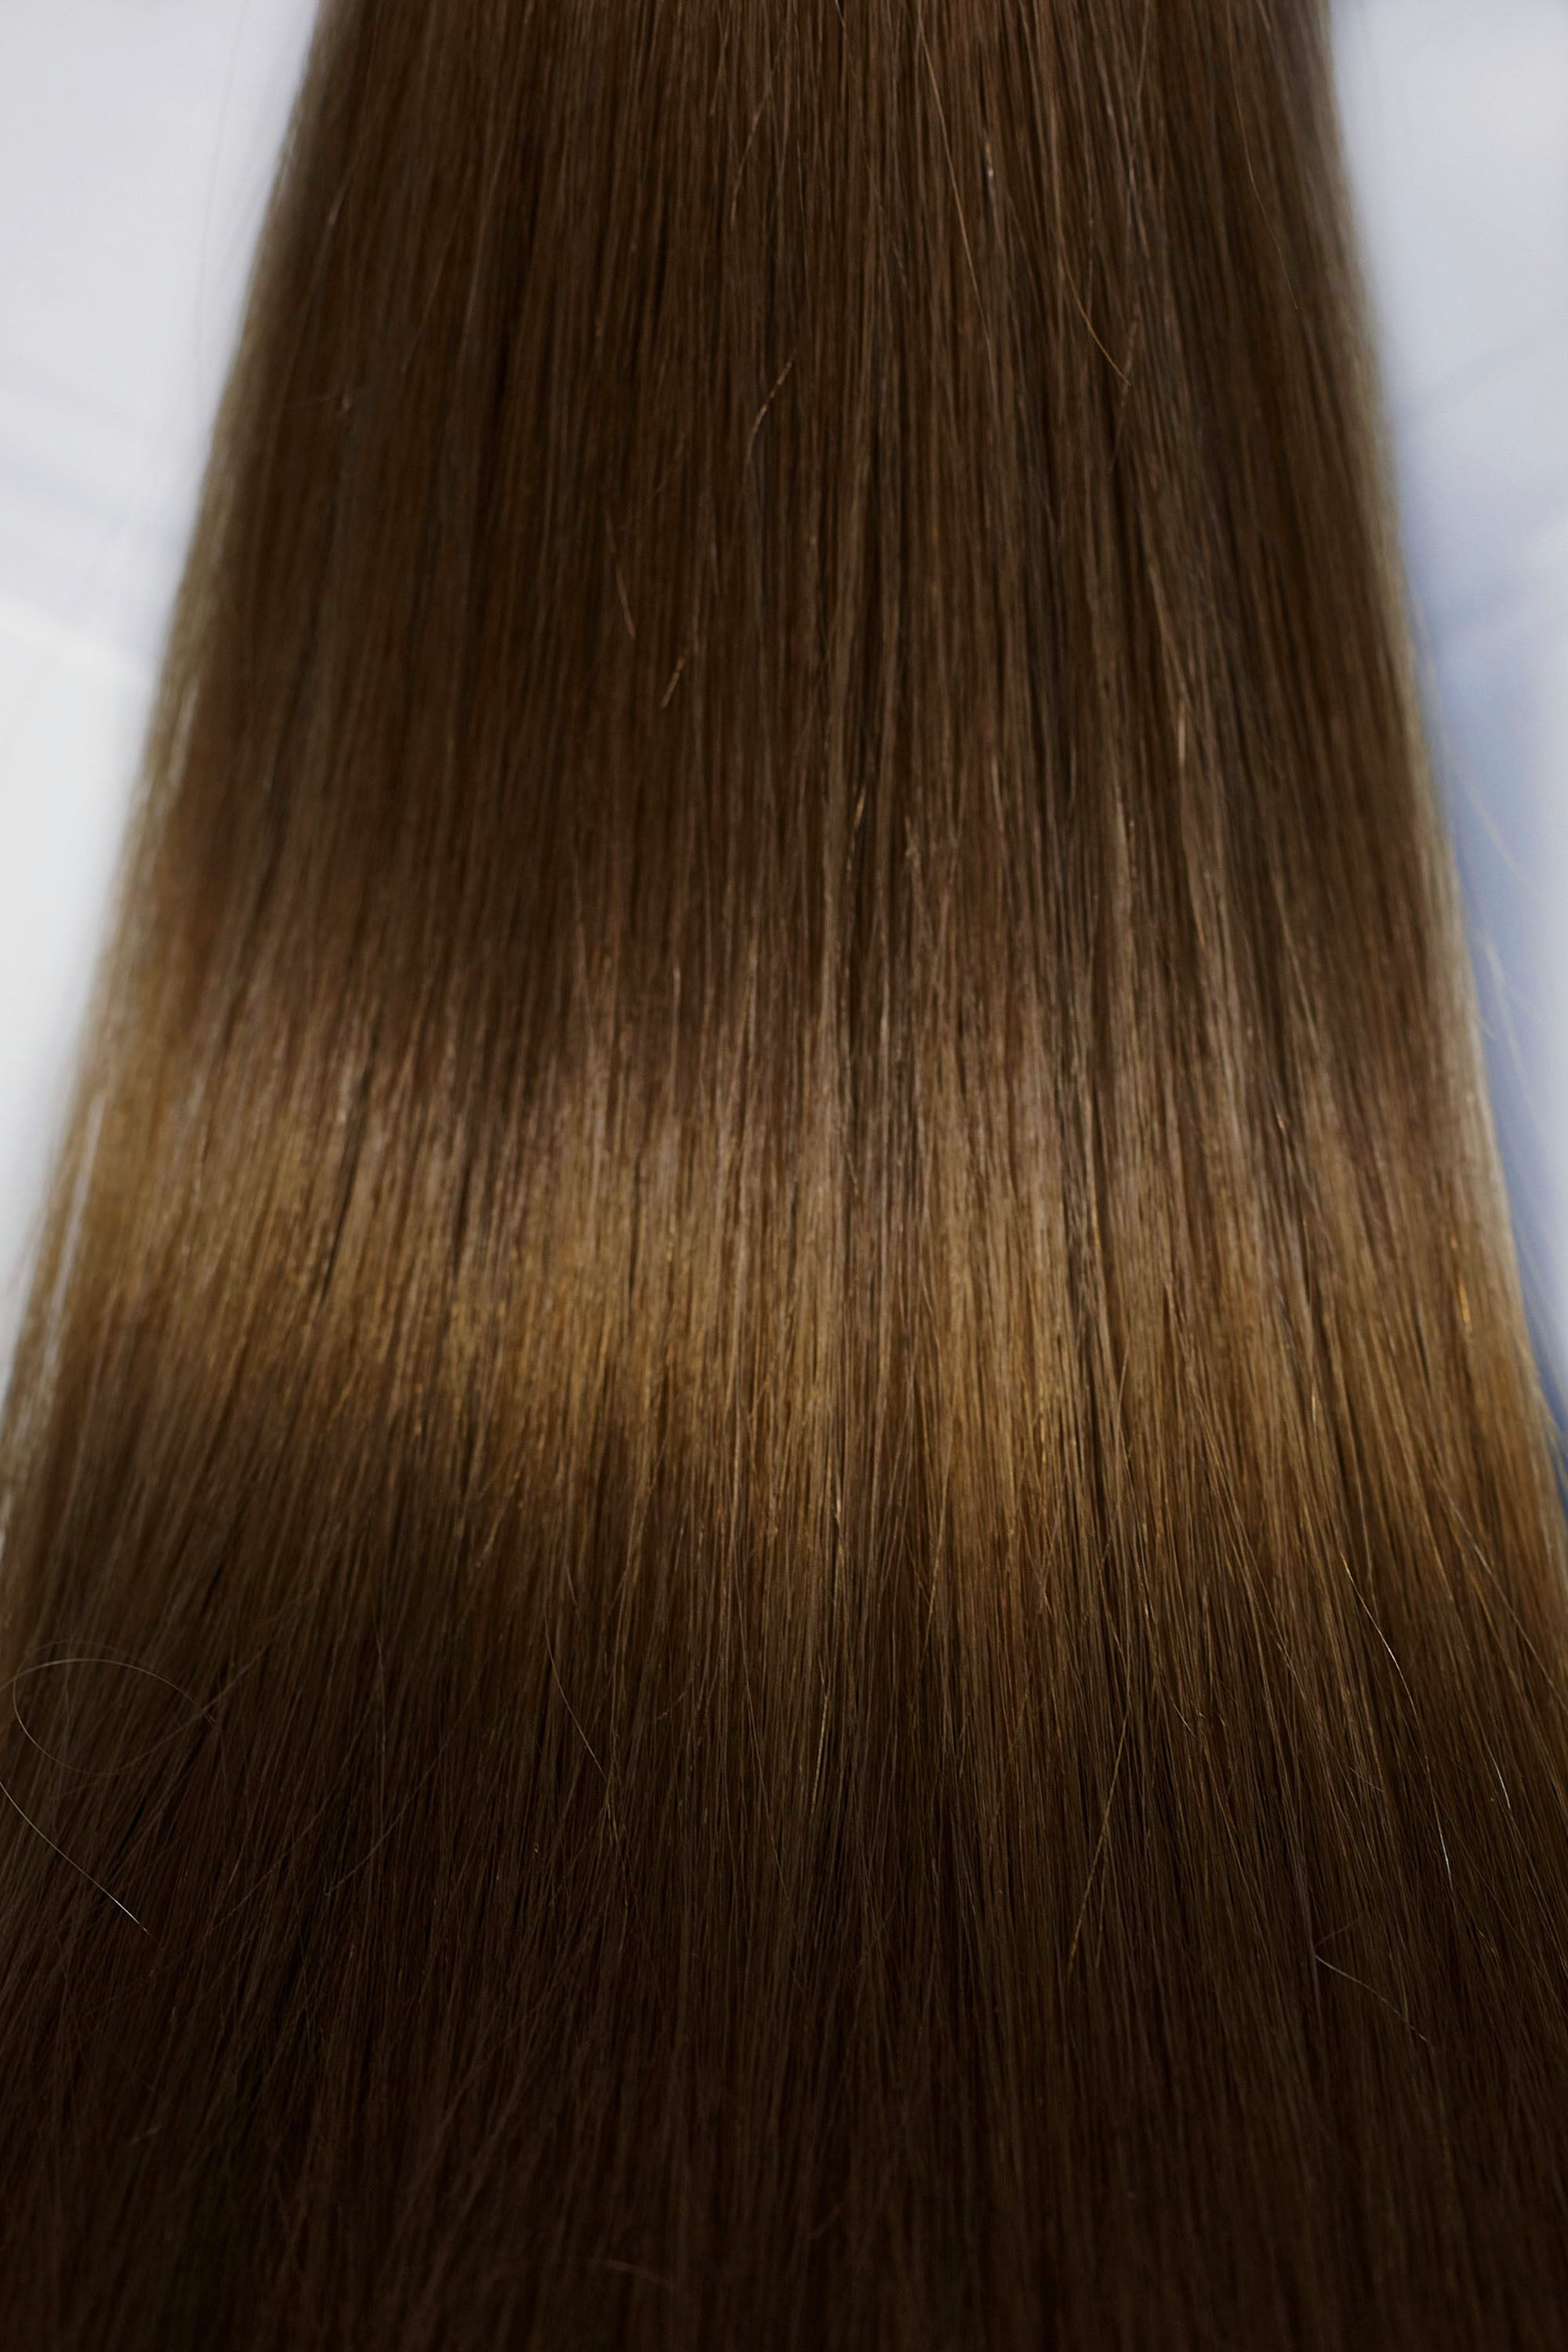 Behair professional Keratin Tip "Premium" 22" (55cm) Natural Straight Honey Walnut Brown #5 - 25g (Standart - 0.7g each pcs) hair extensions